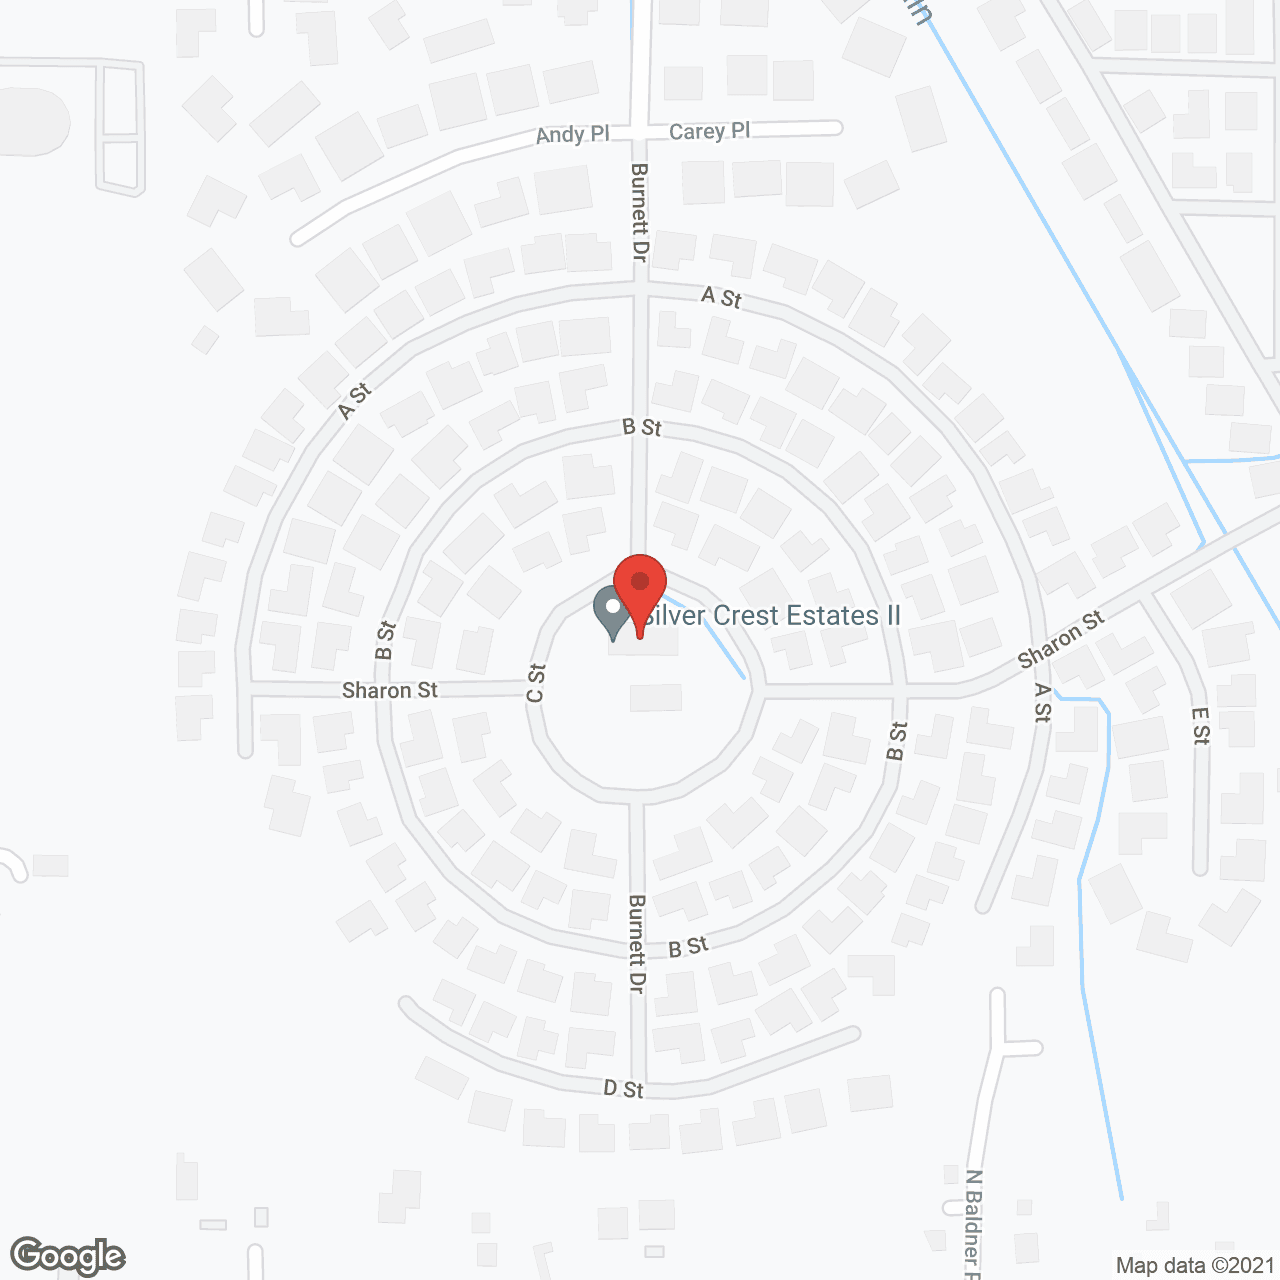 Silver Crest Estates II in google map